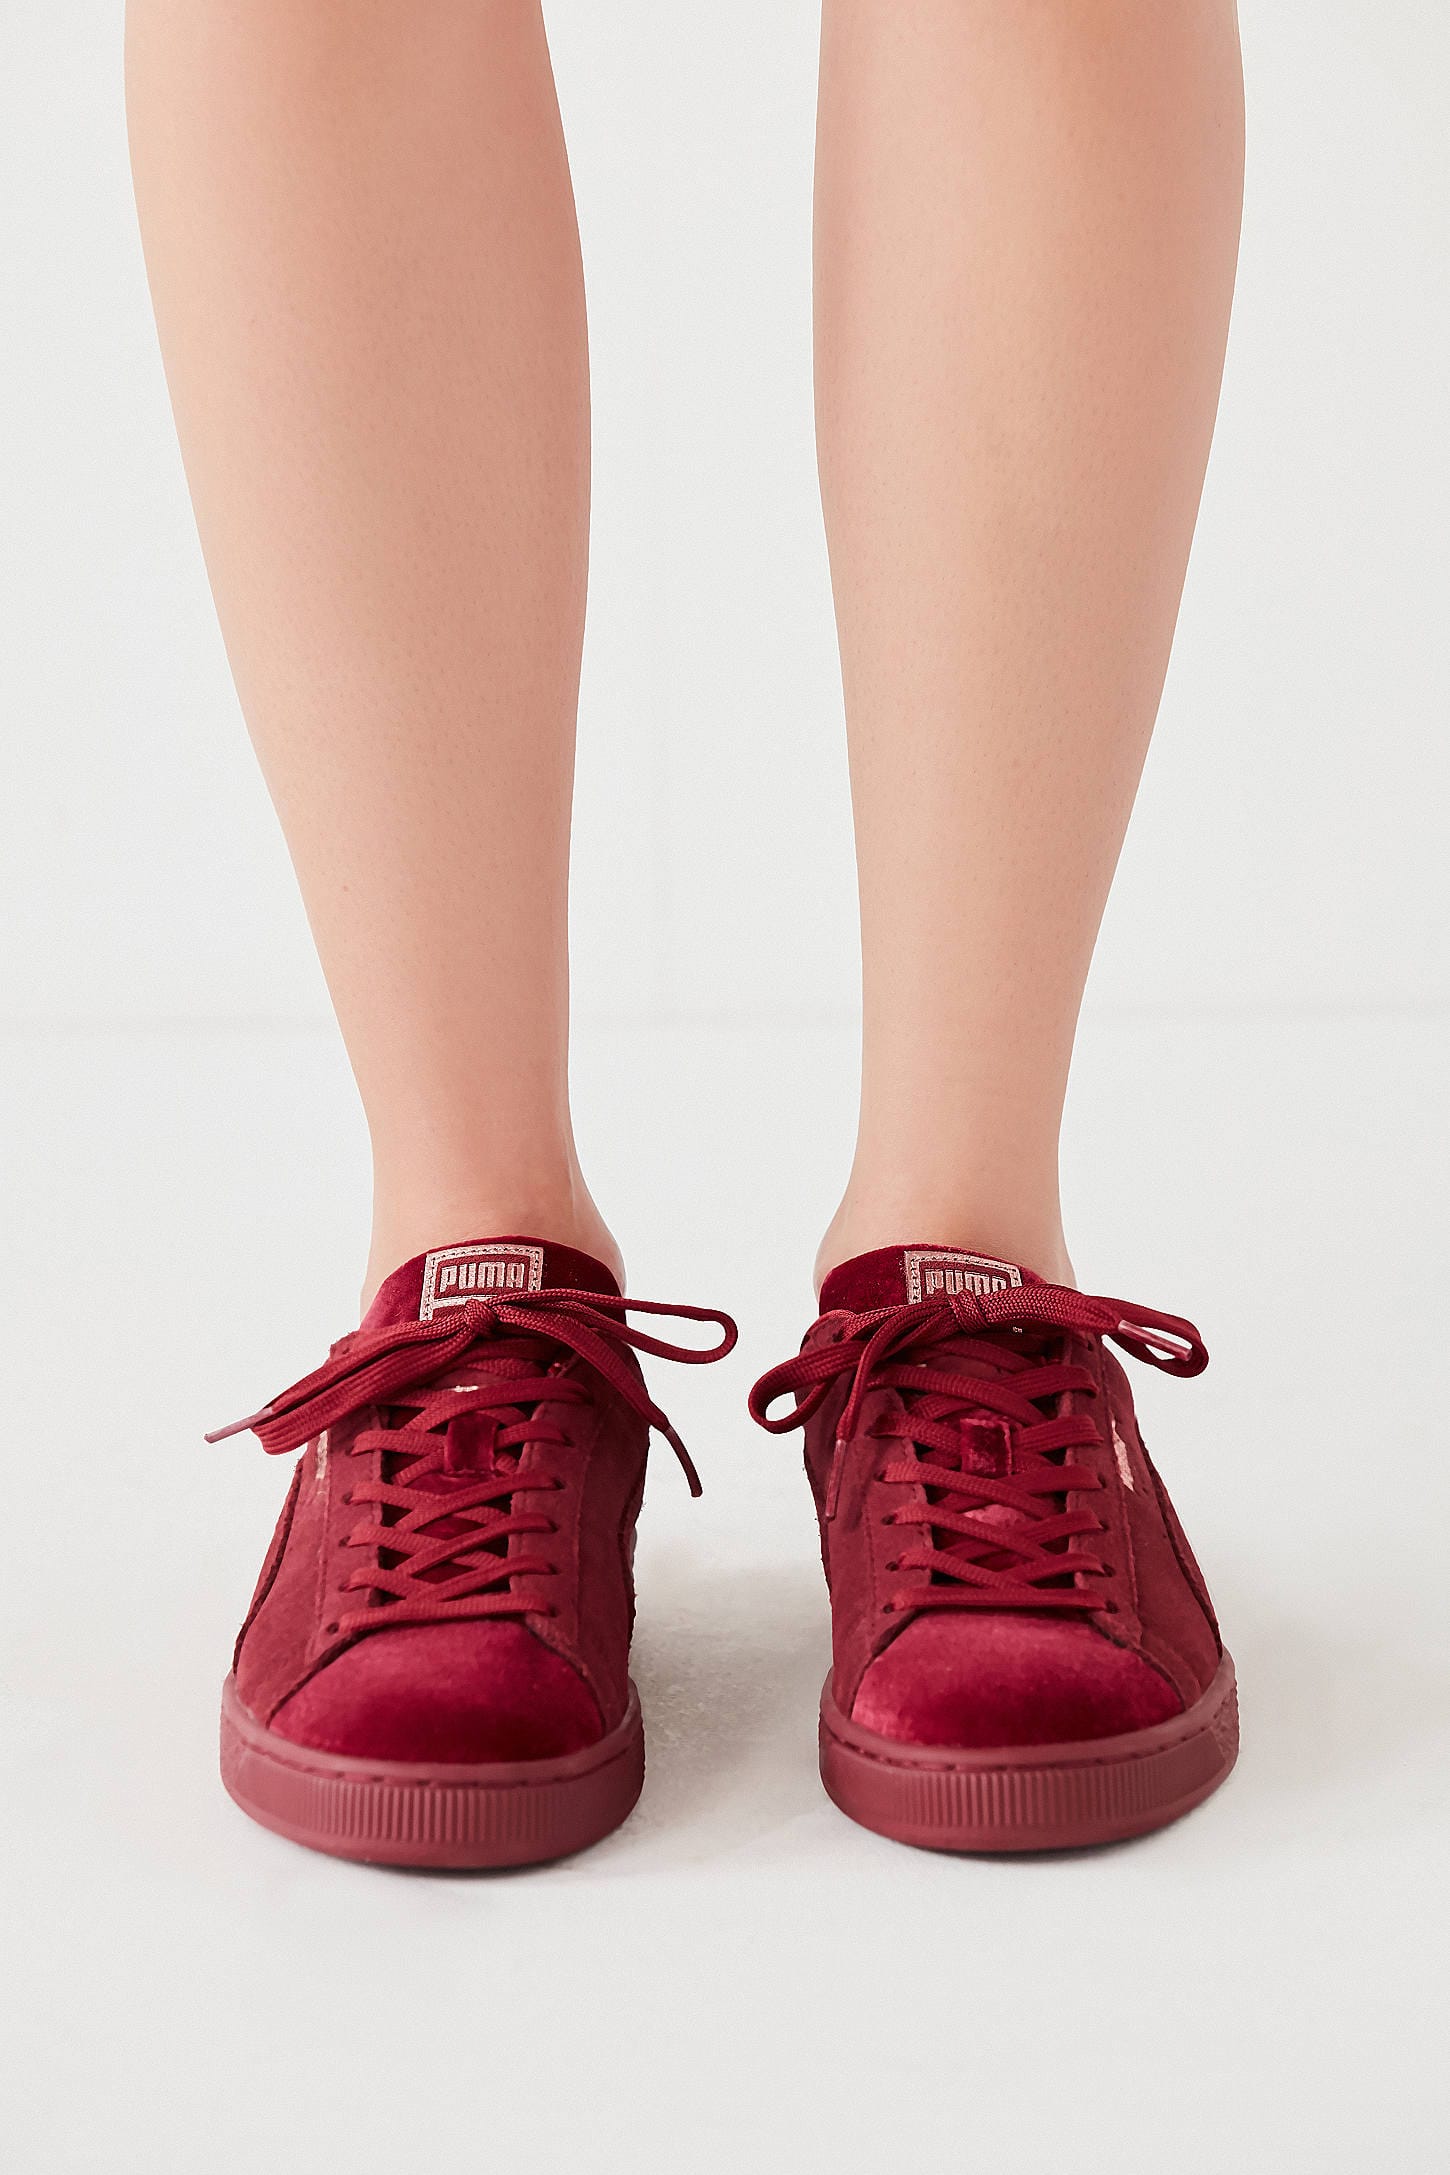 puma suede classic burgundy sneakers